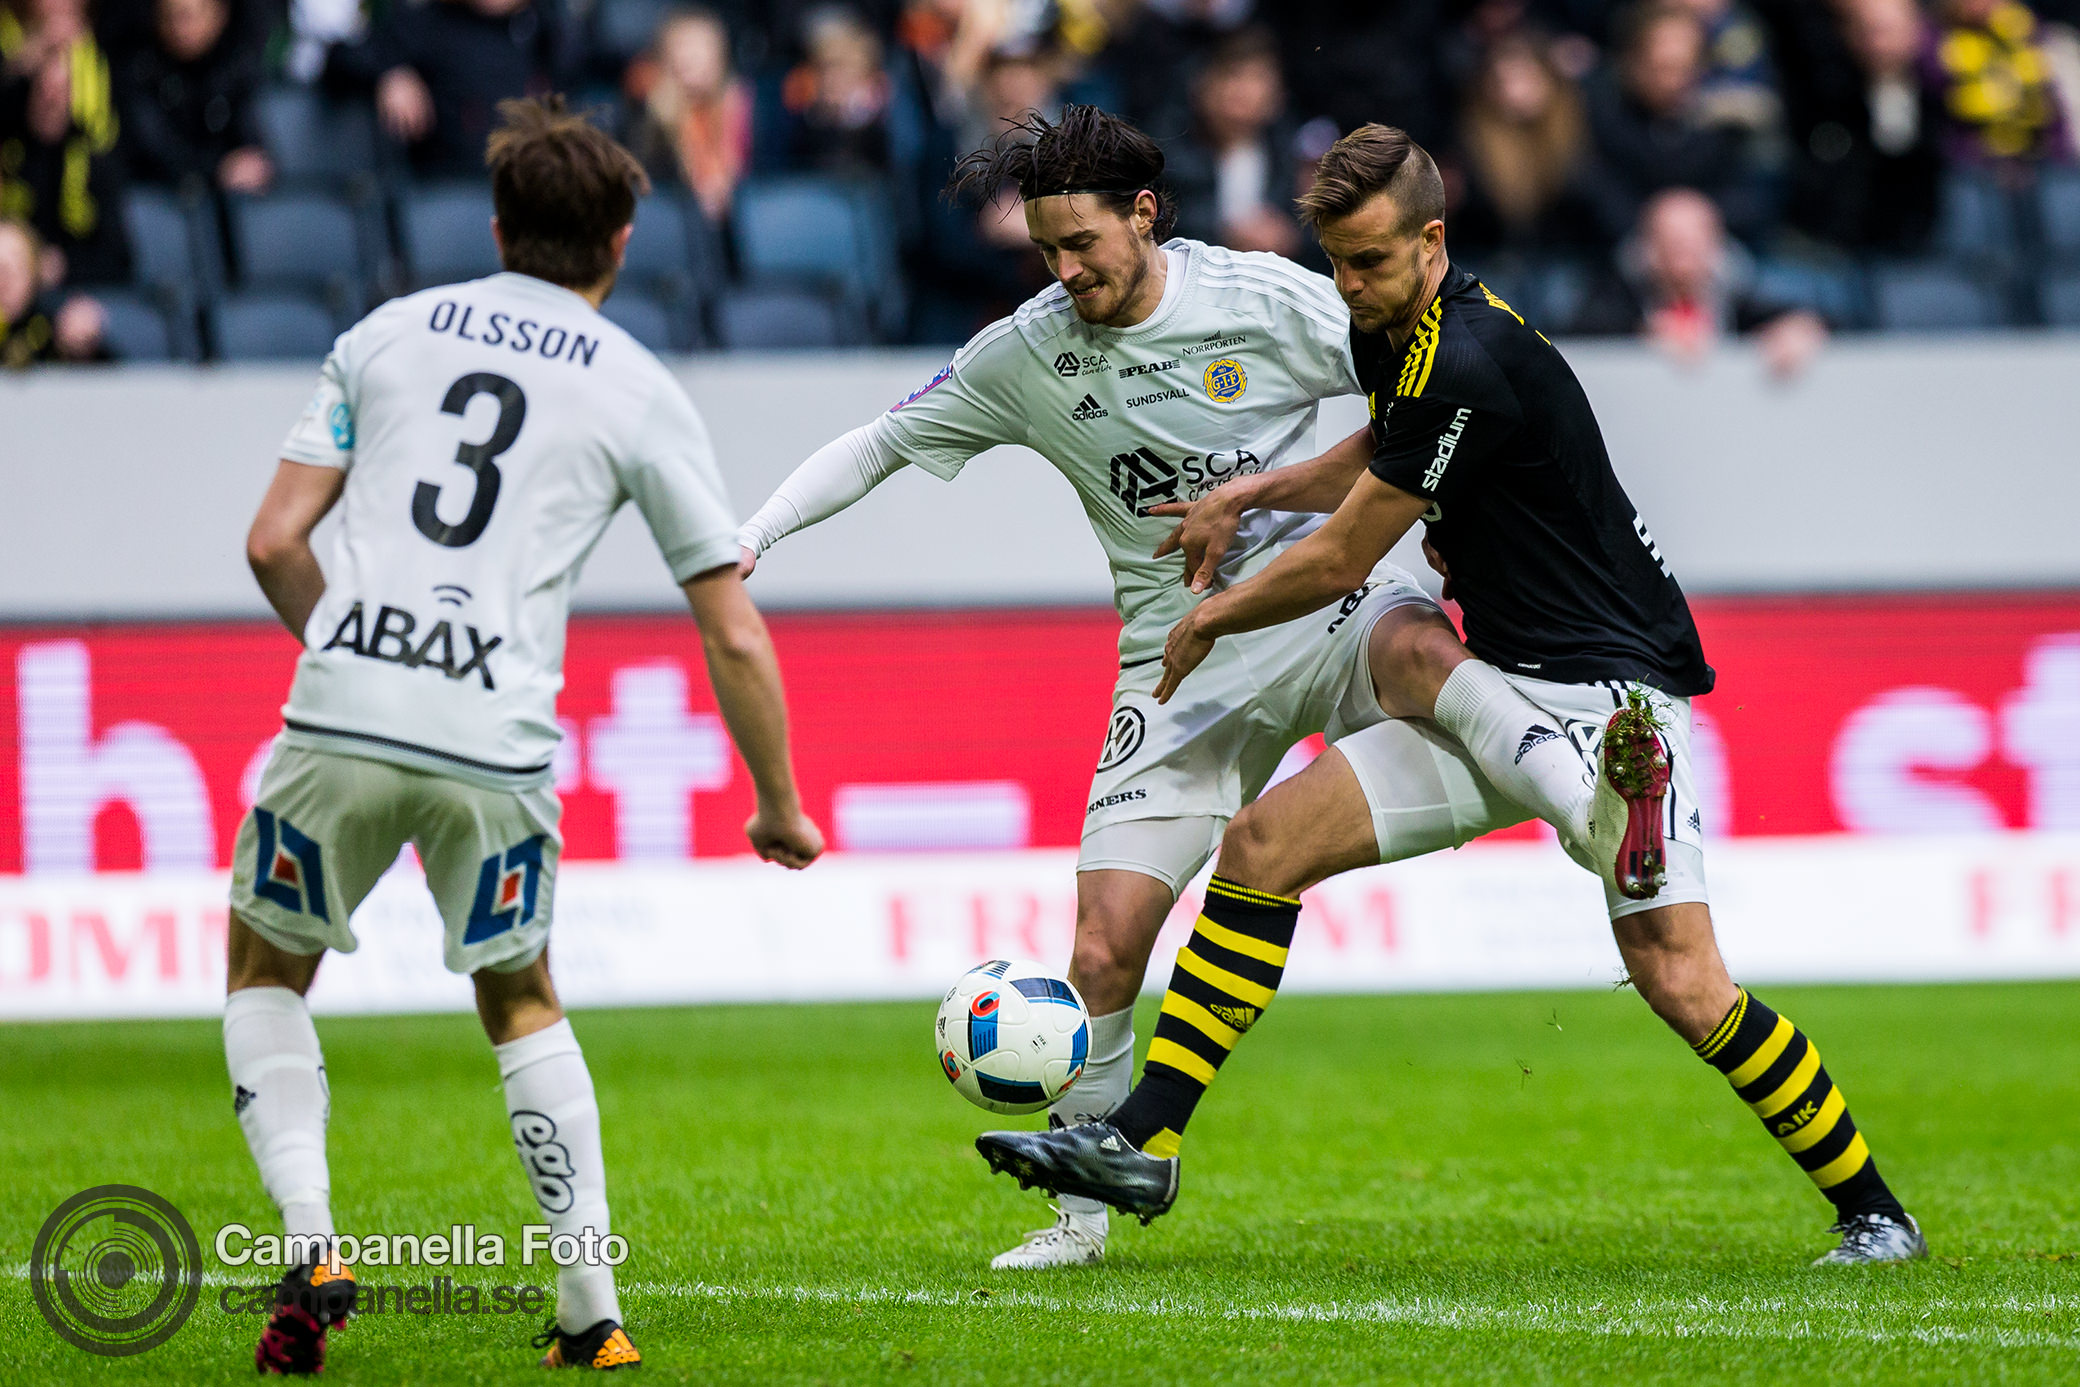 AIK draws home premiere - Michael Campanella Photography